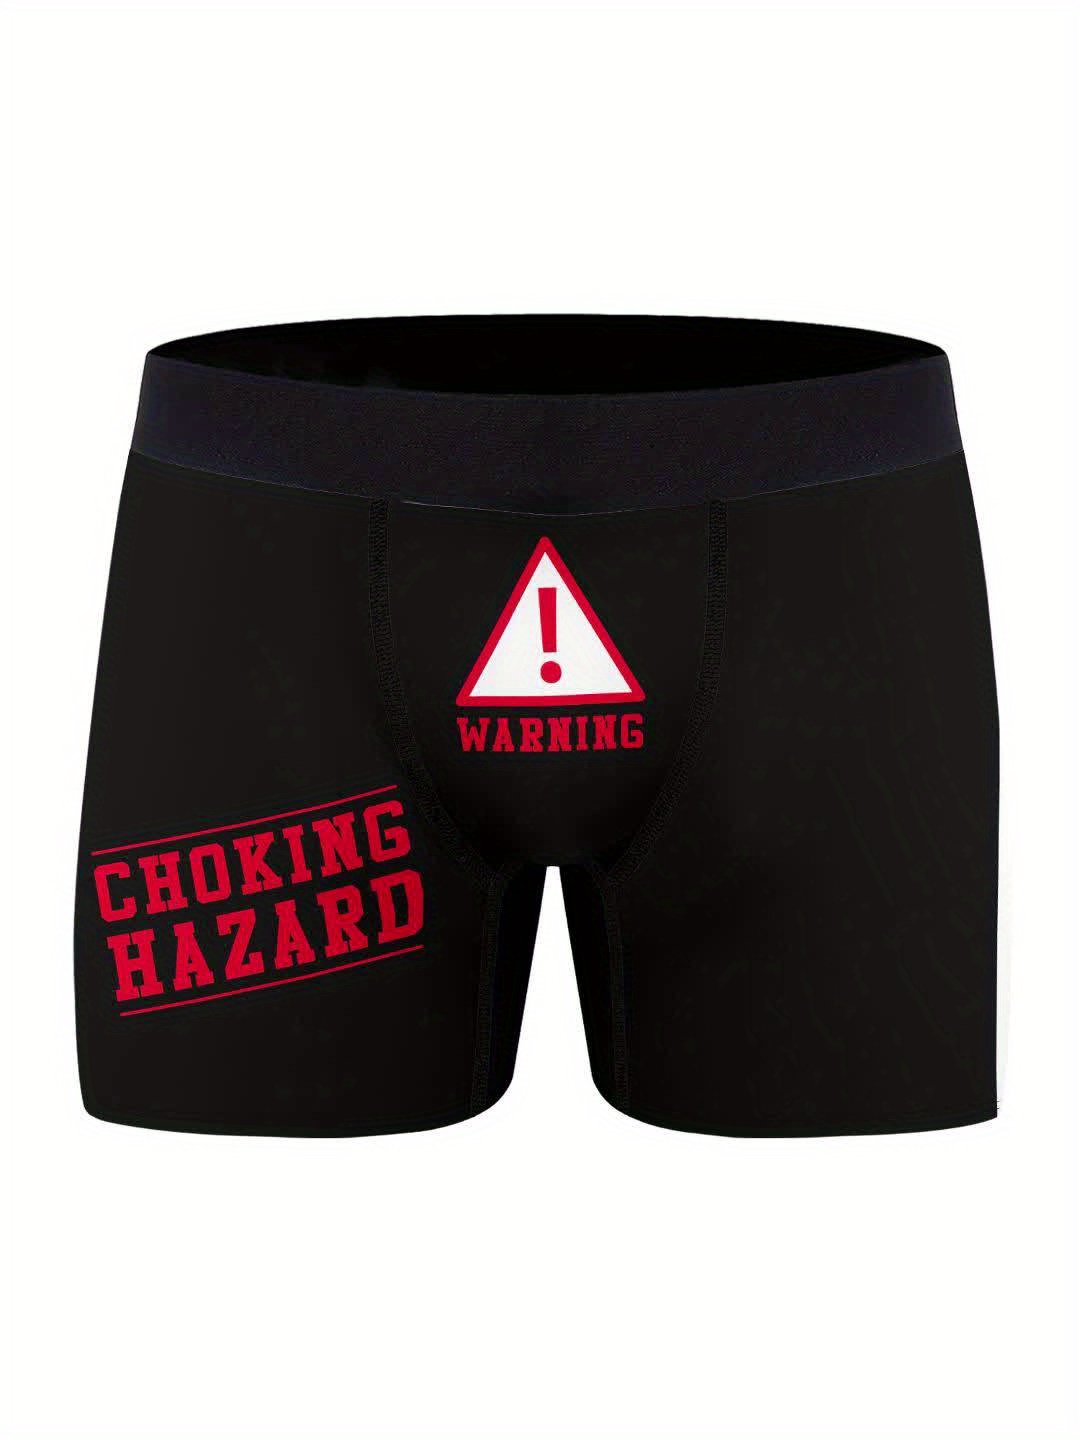 Mens Boxer Shorts Underwear Pants valentines gift him funny rude choking  hazard